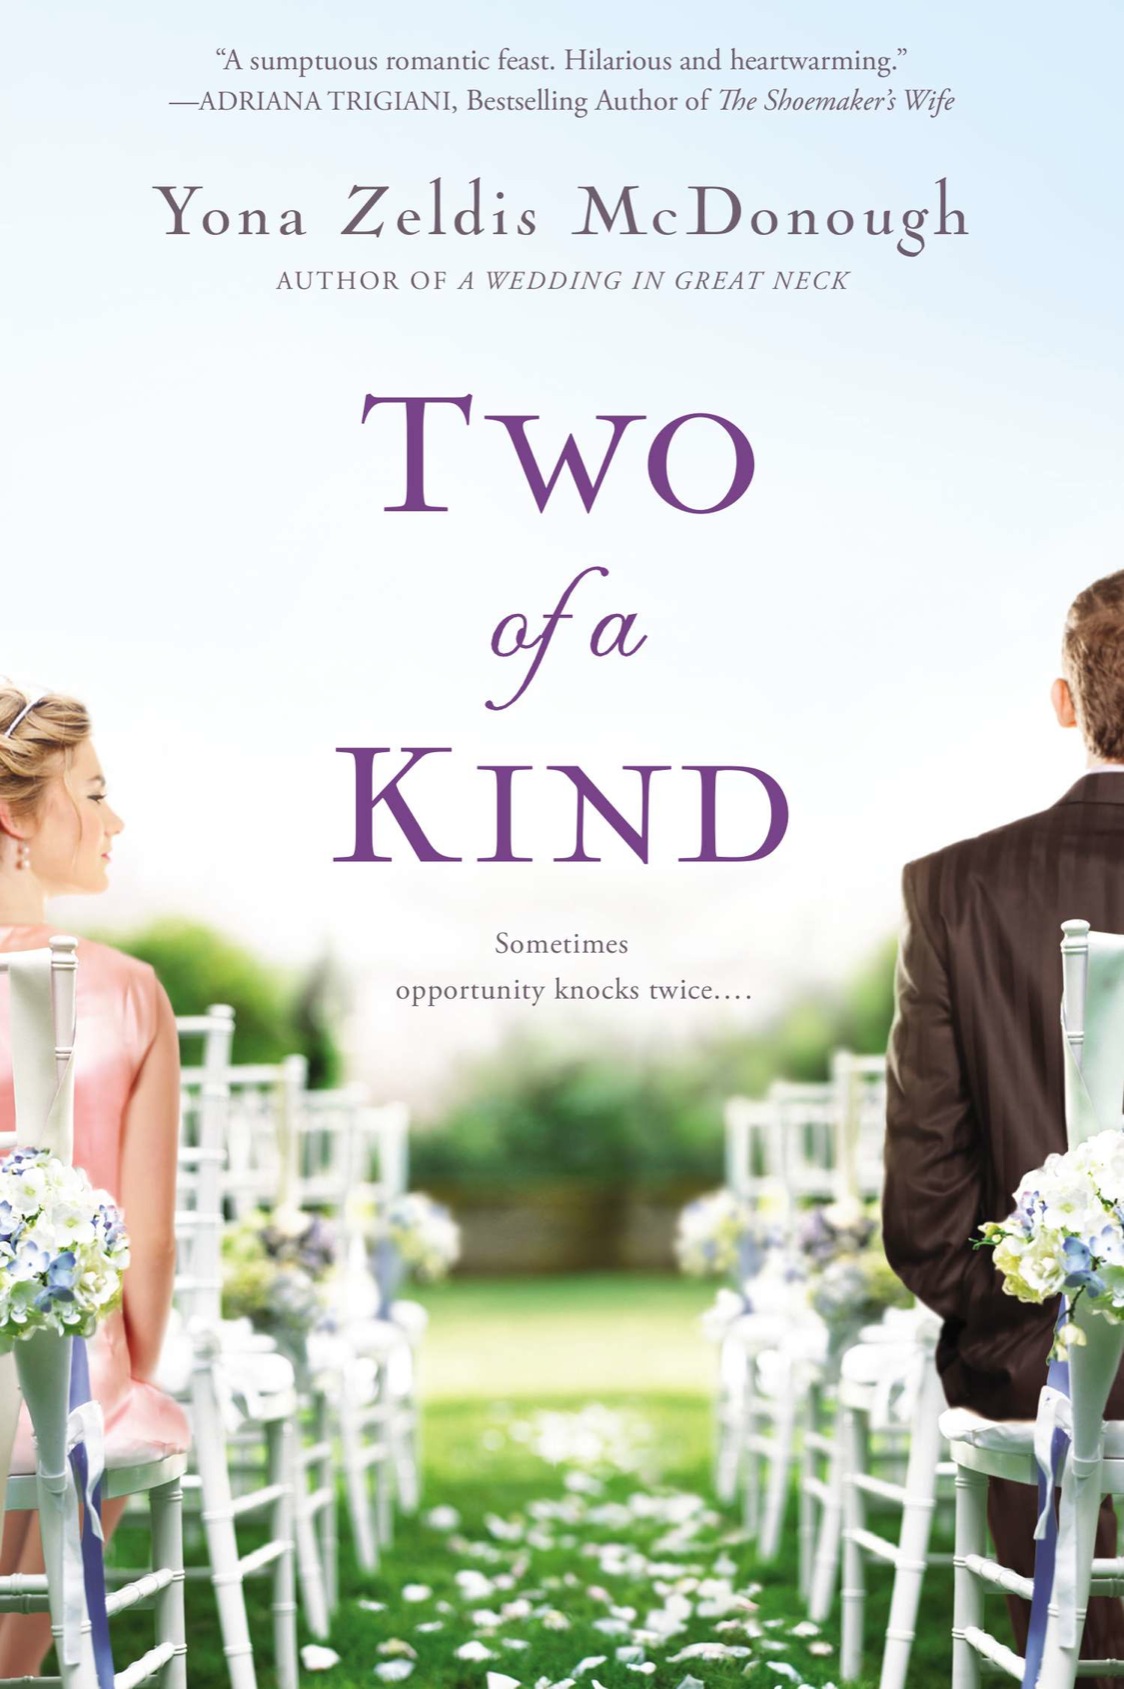 Two of a Kind (2013) by Yona Zeldis McDonough